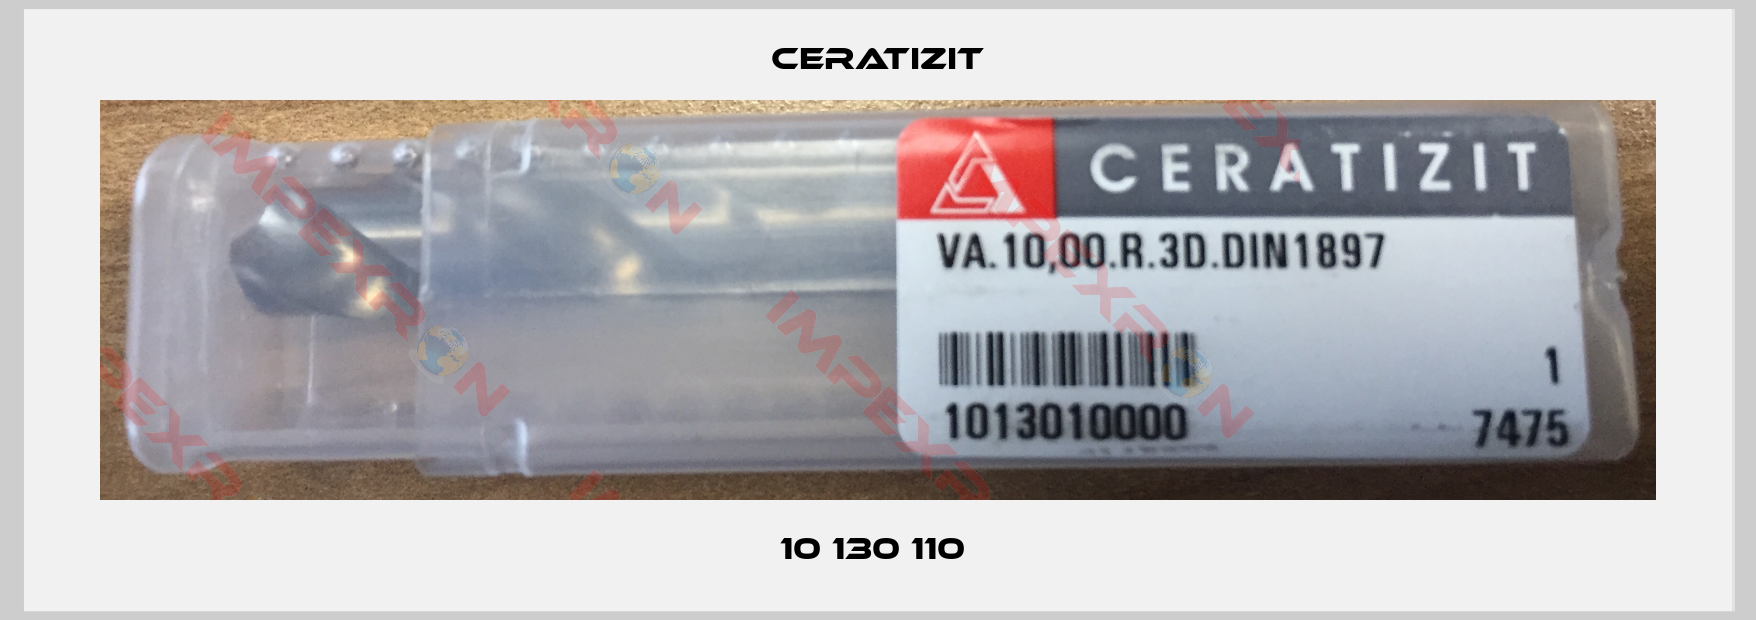 Ceratizit-10 130 110 